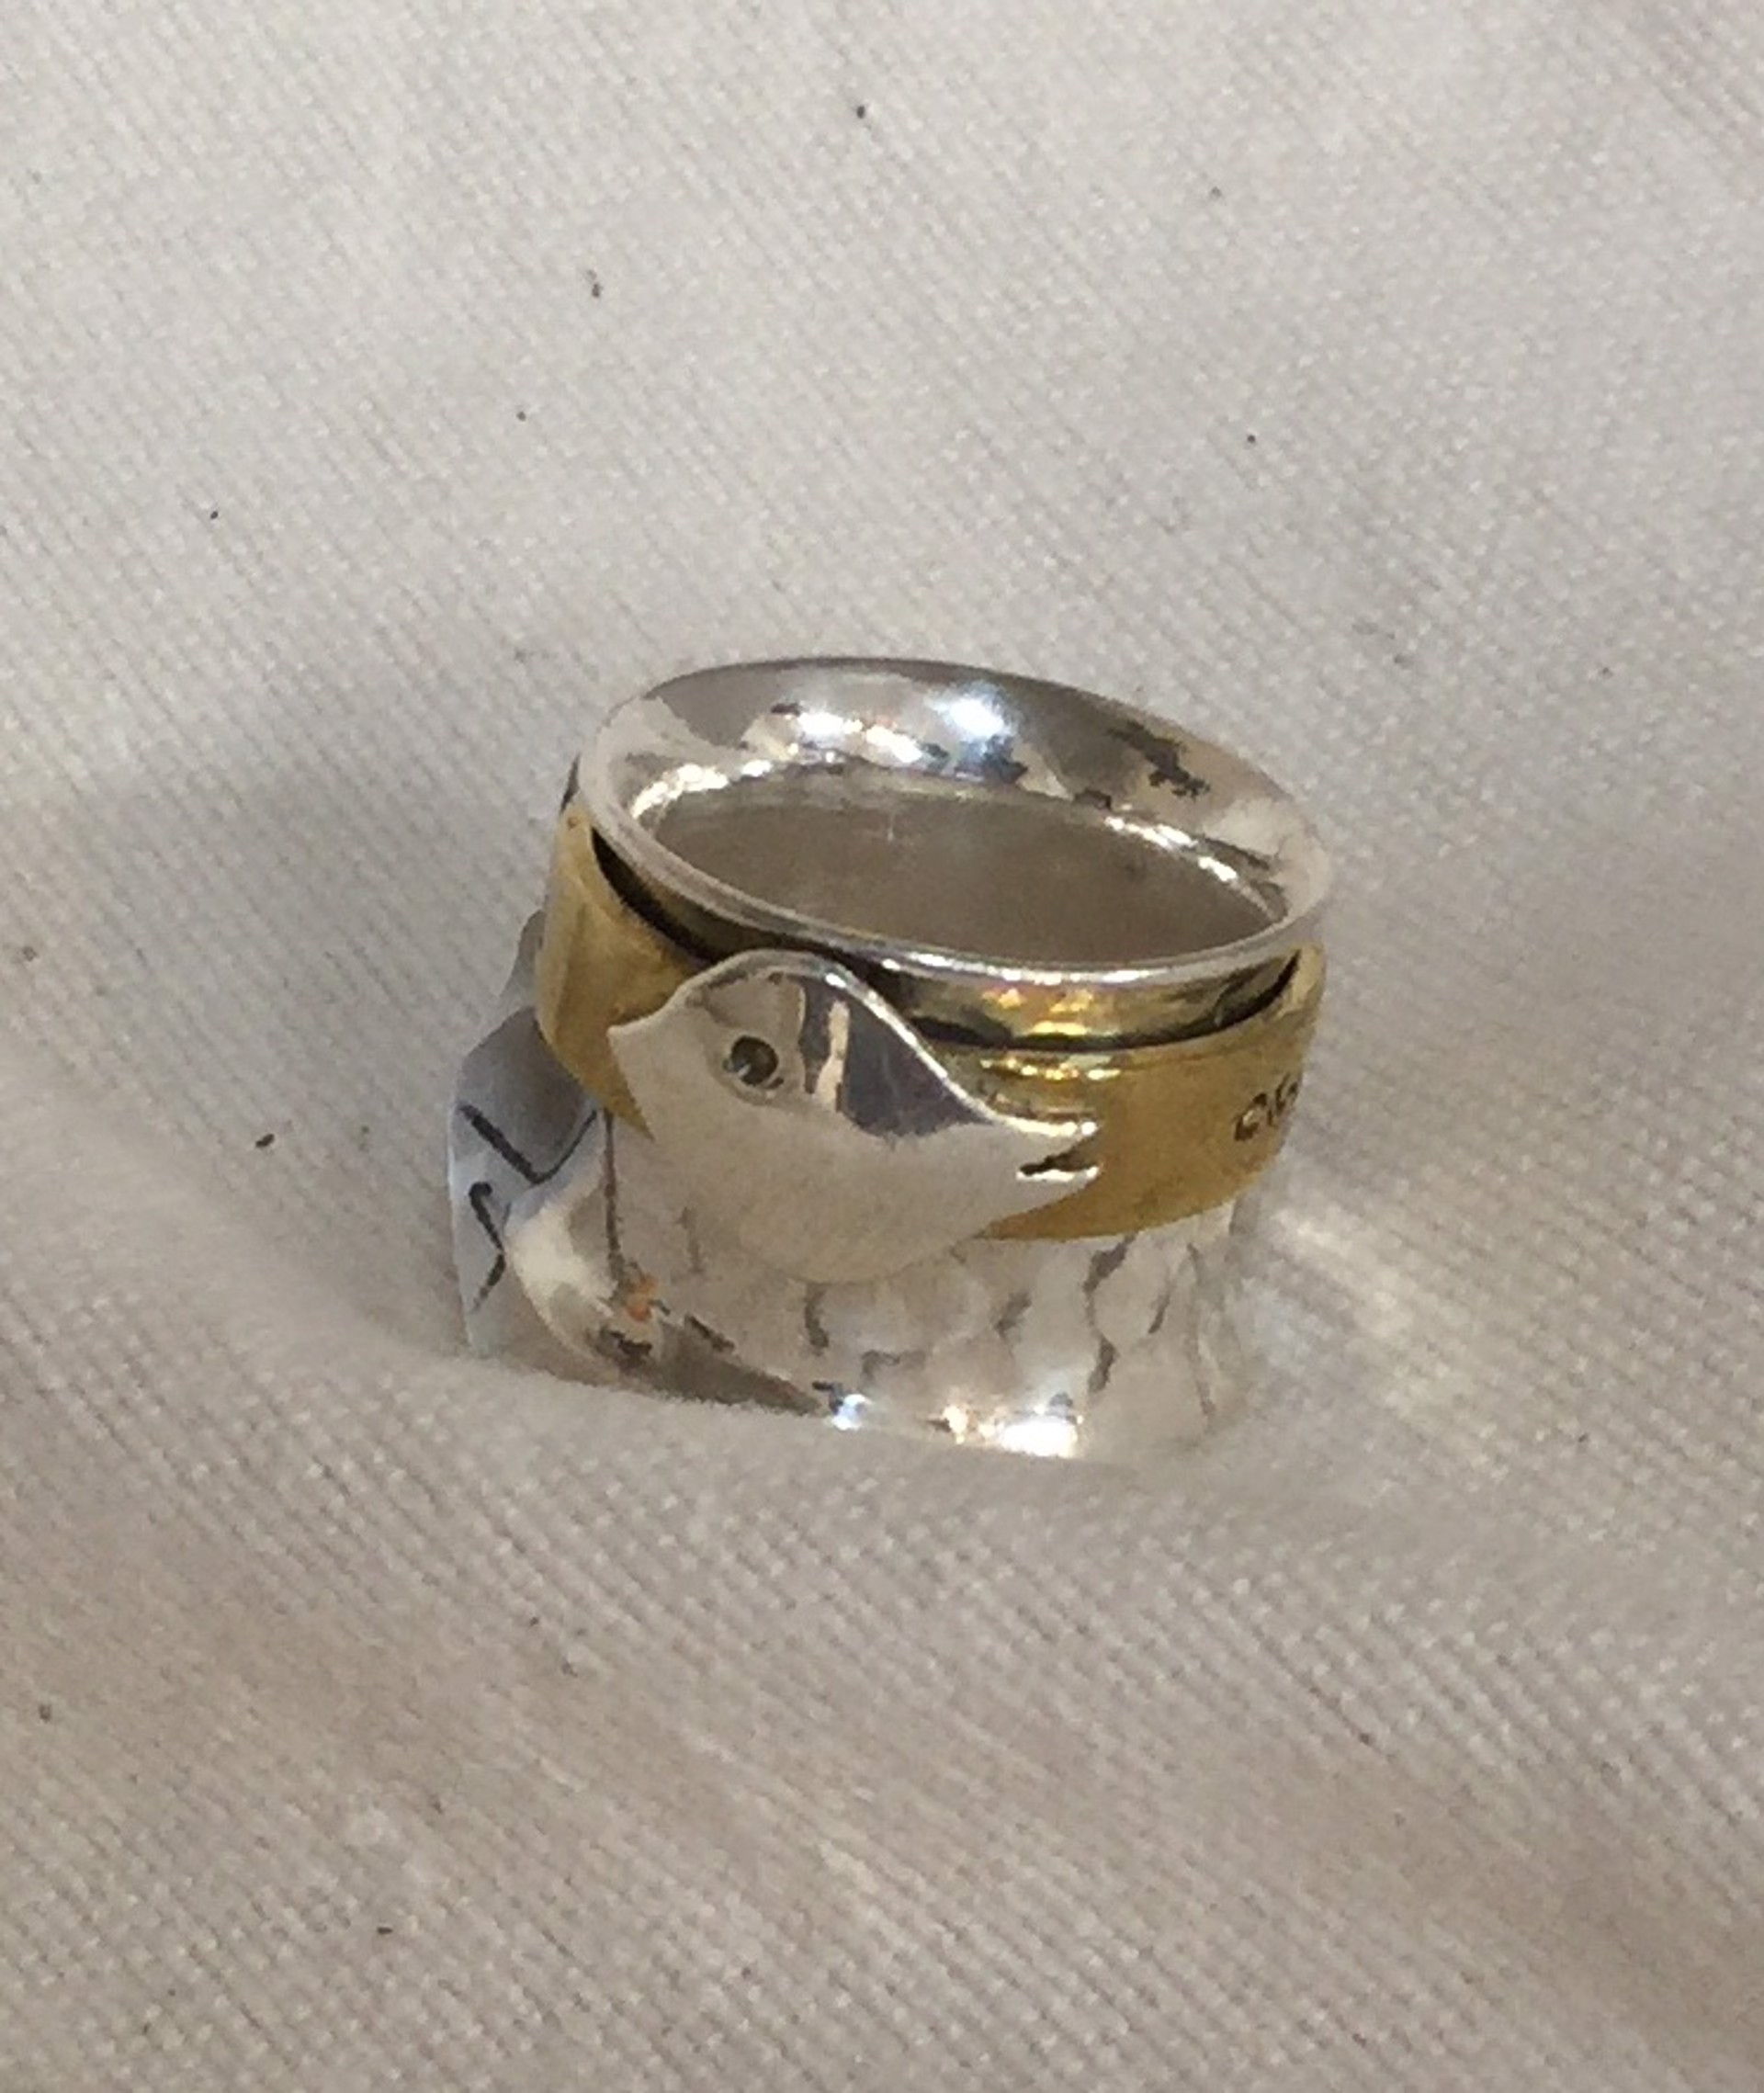 Ring - "Create Spirit" - Sterling Silver & Brass Size 5.5 - #3005 by Vesta Abel